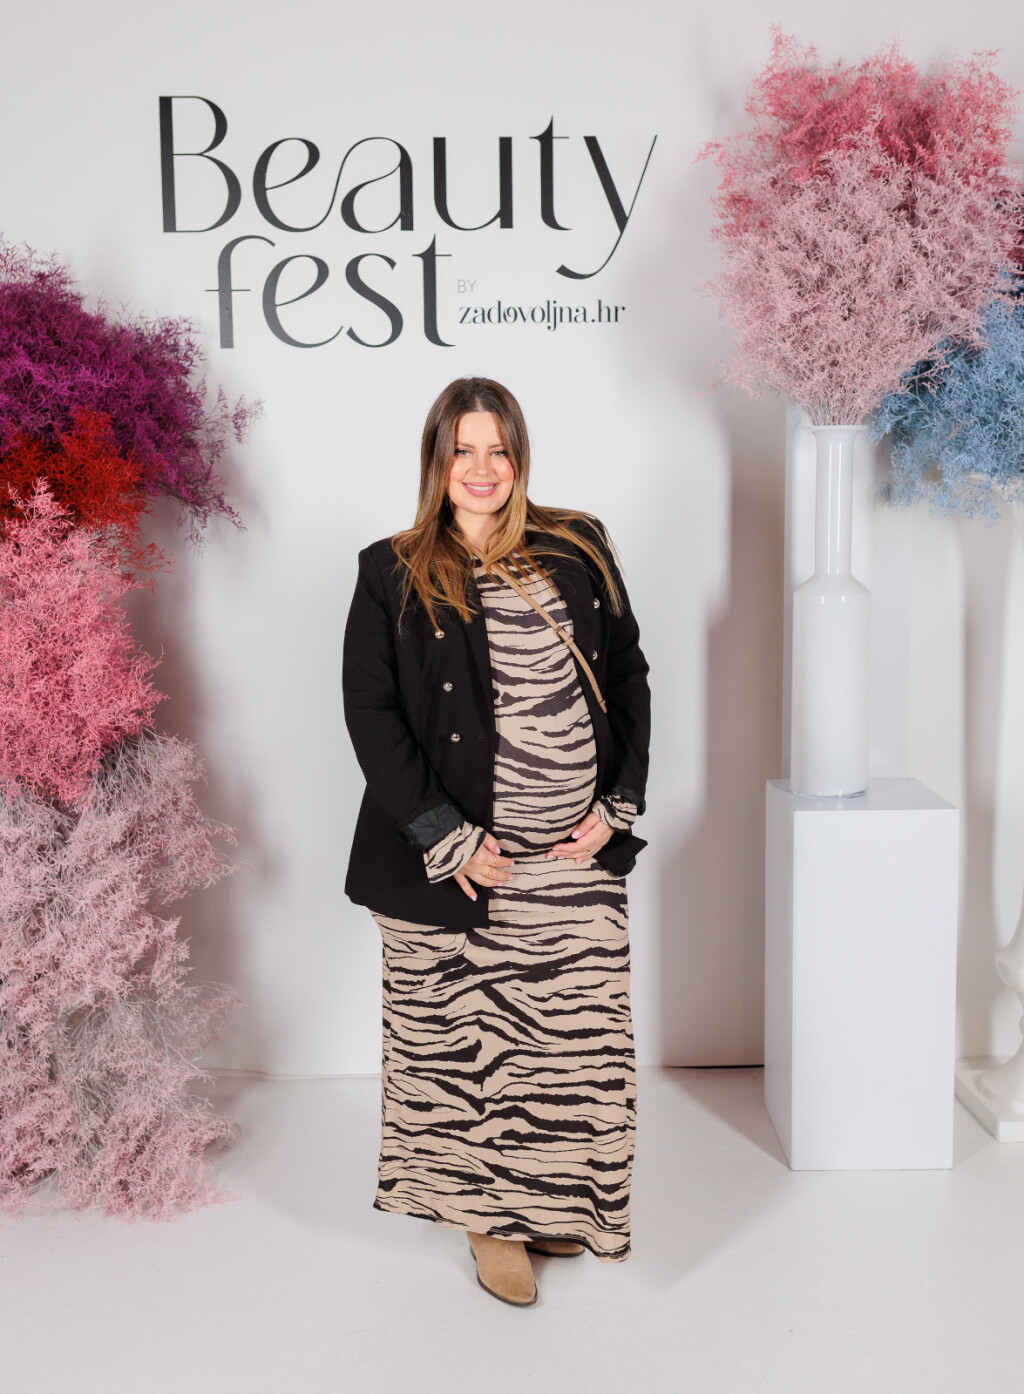 Lucija Lugomer na eventu Beautyfest by zadovoljna.hr - 2